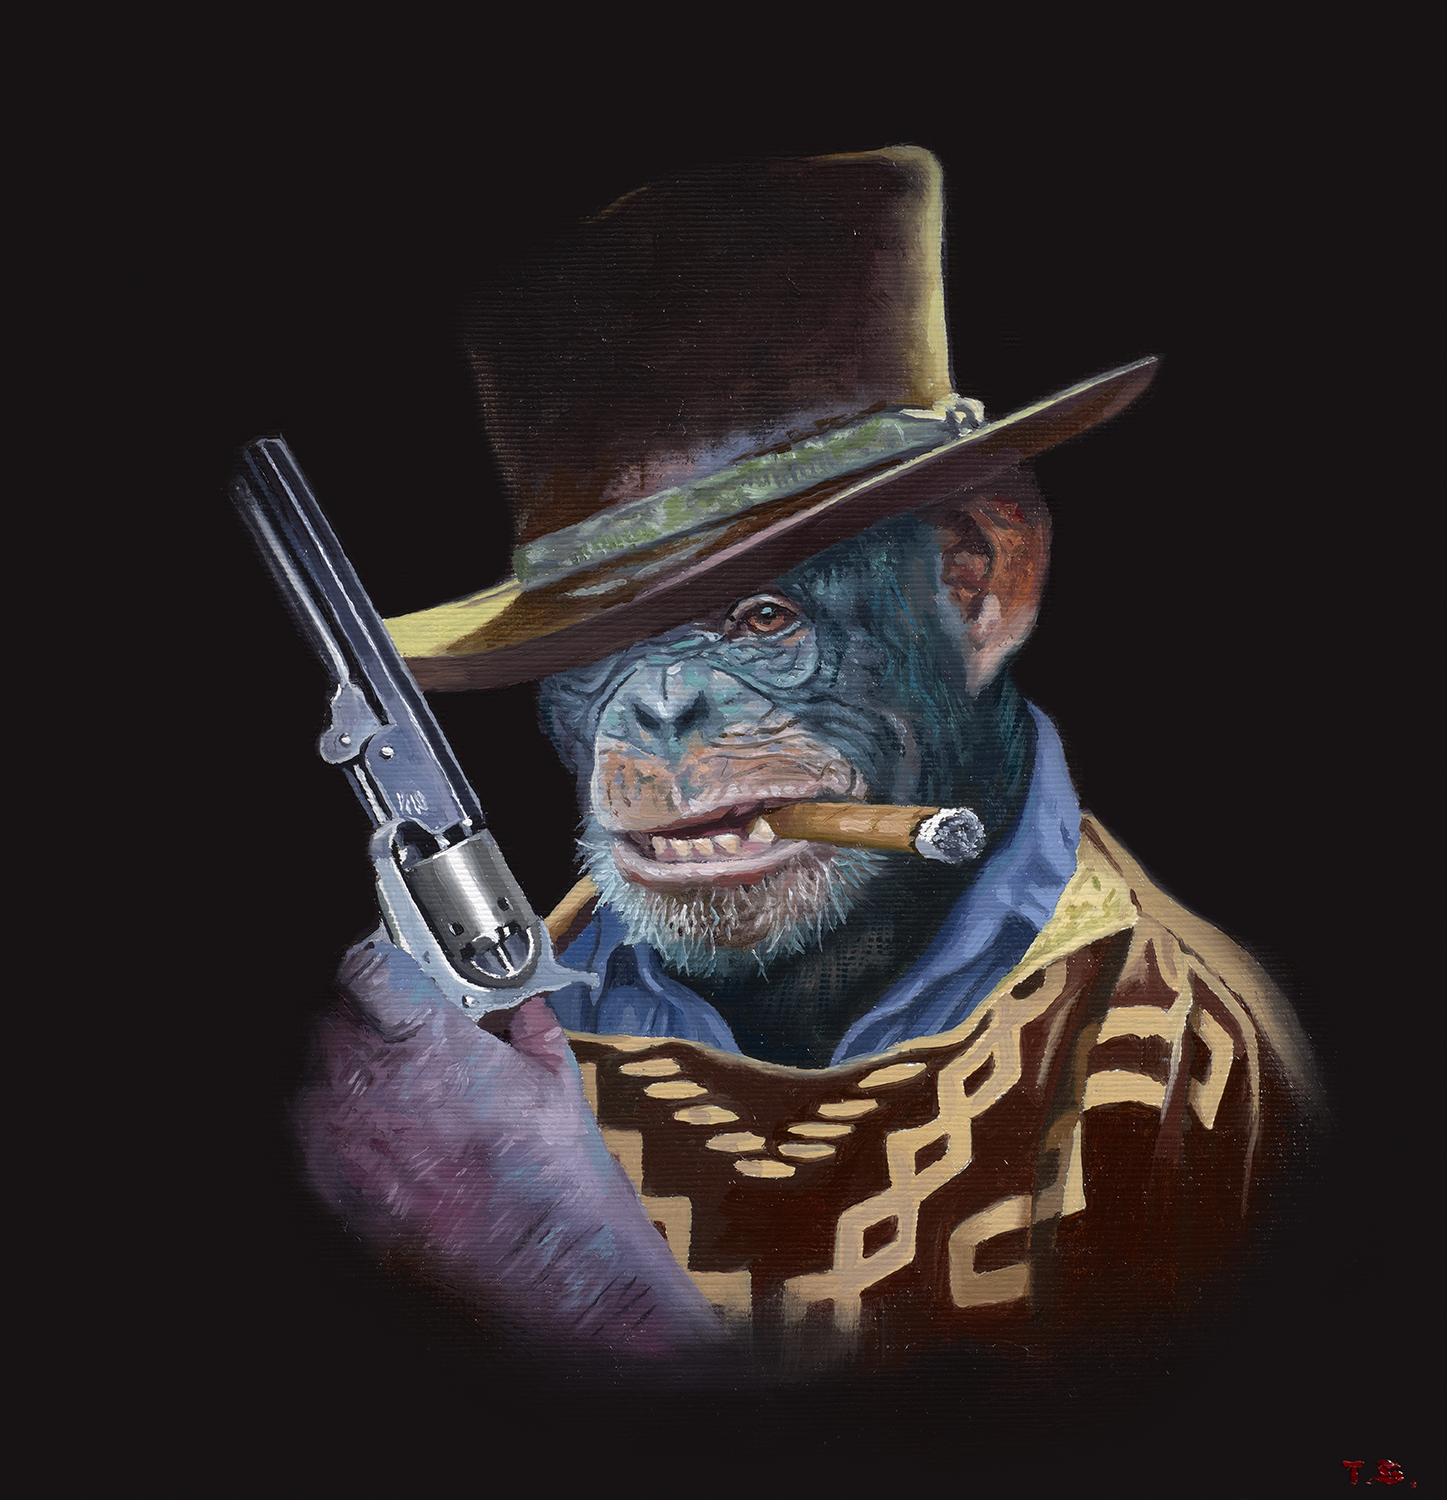 A monkey dressed as a cowboy holding a pistol - Tony South - Drifter